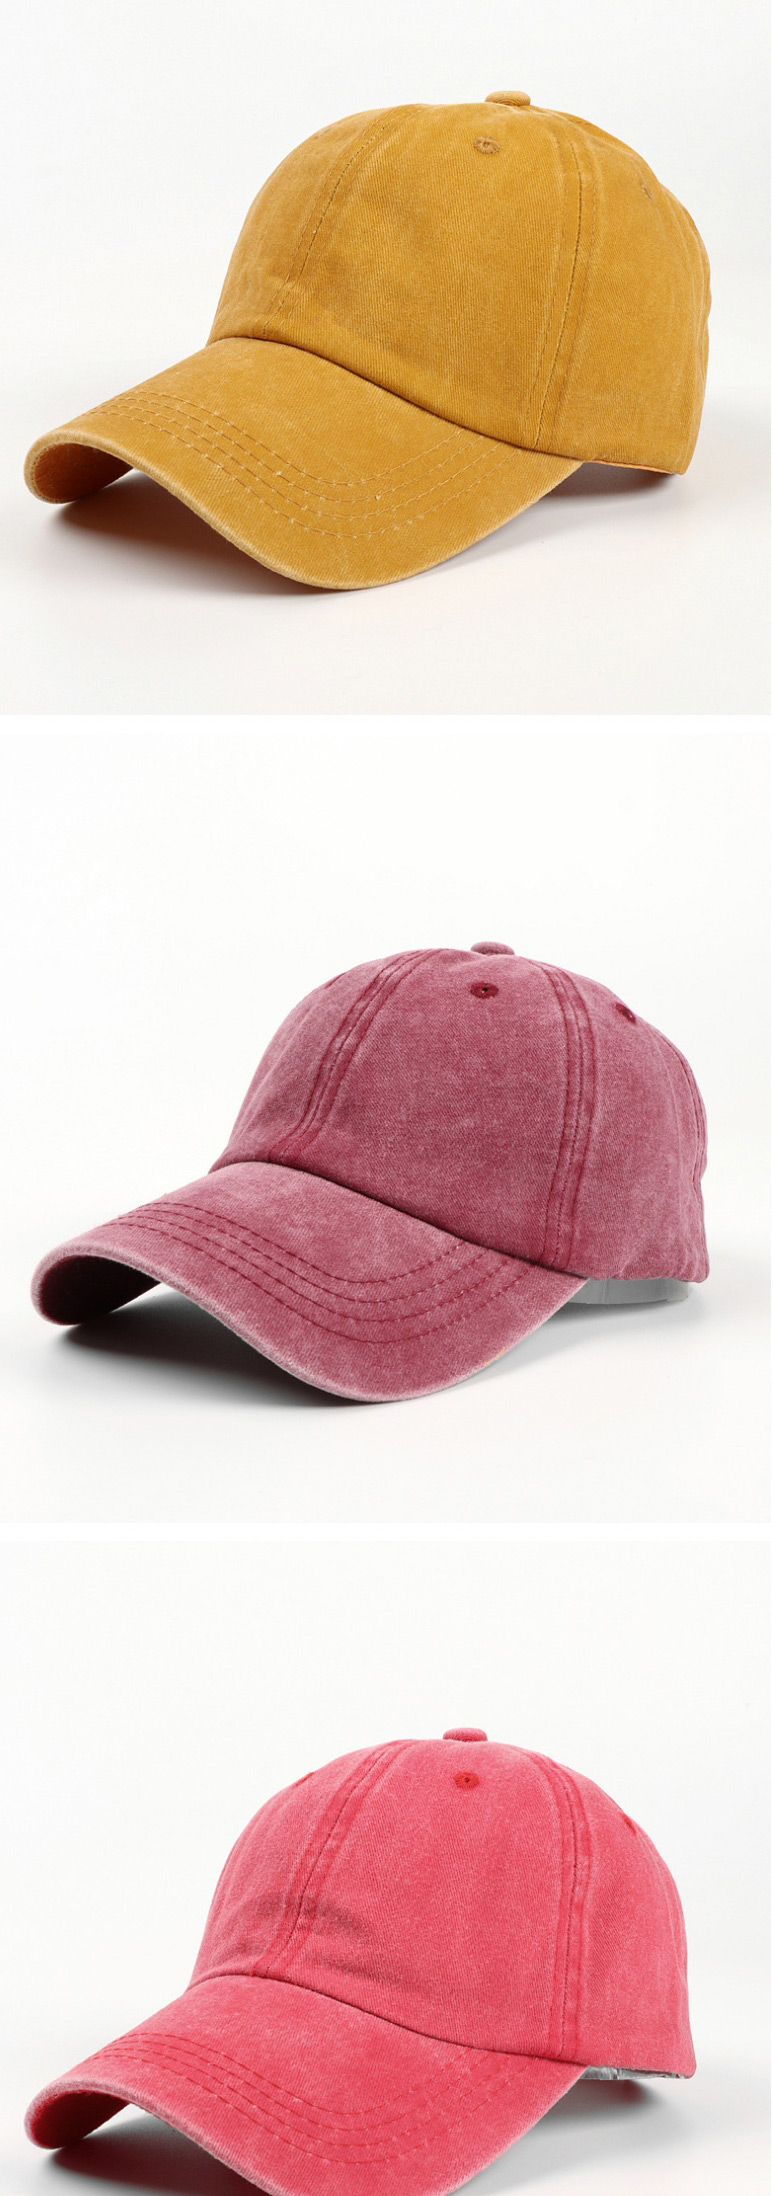 Fashion Rose Red Washed Distressed Denim Soft Top Curved Brim Cap,Baseball Caps